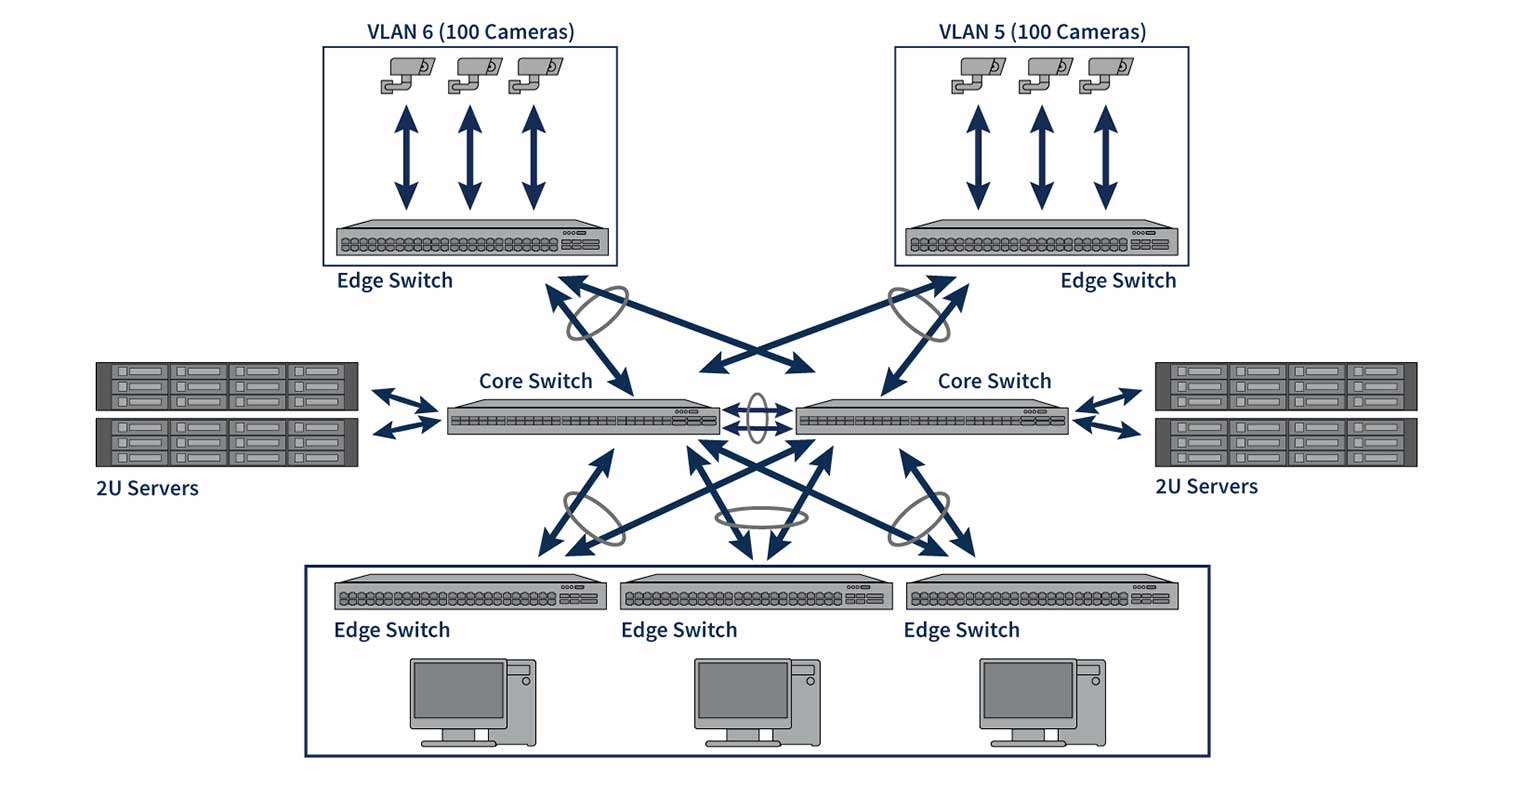 Segmenting a Video Surveillance Network